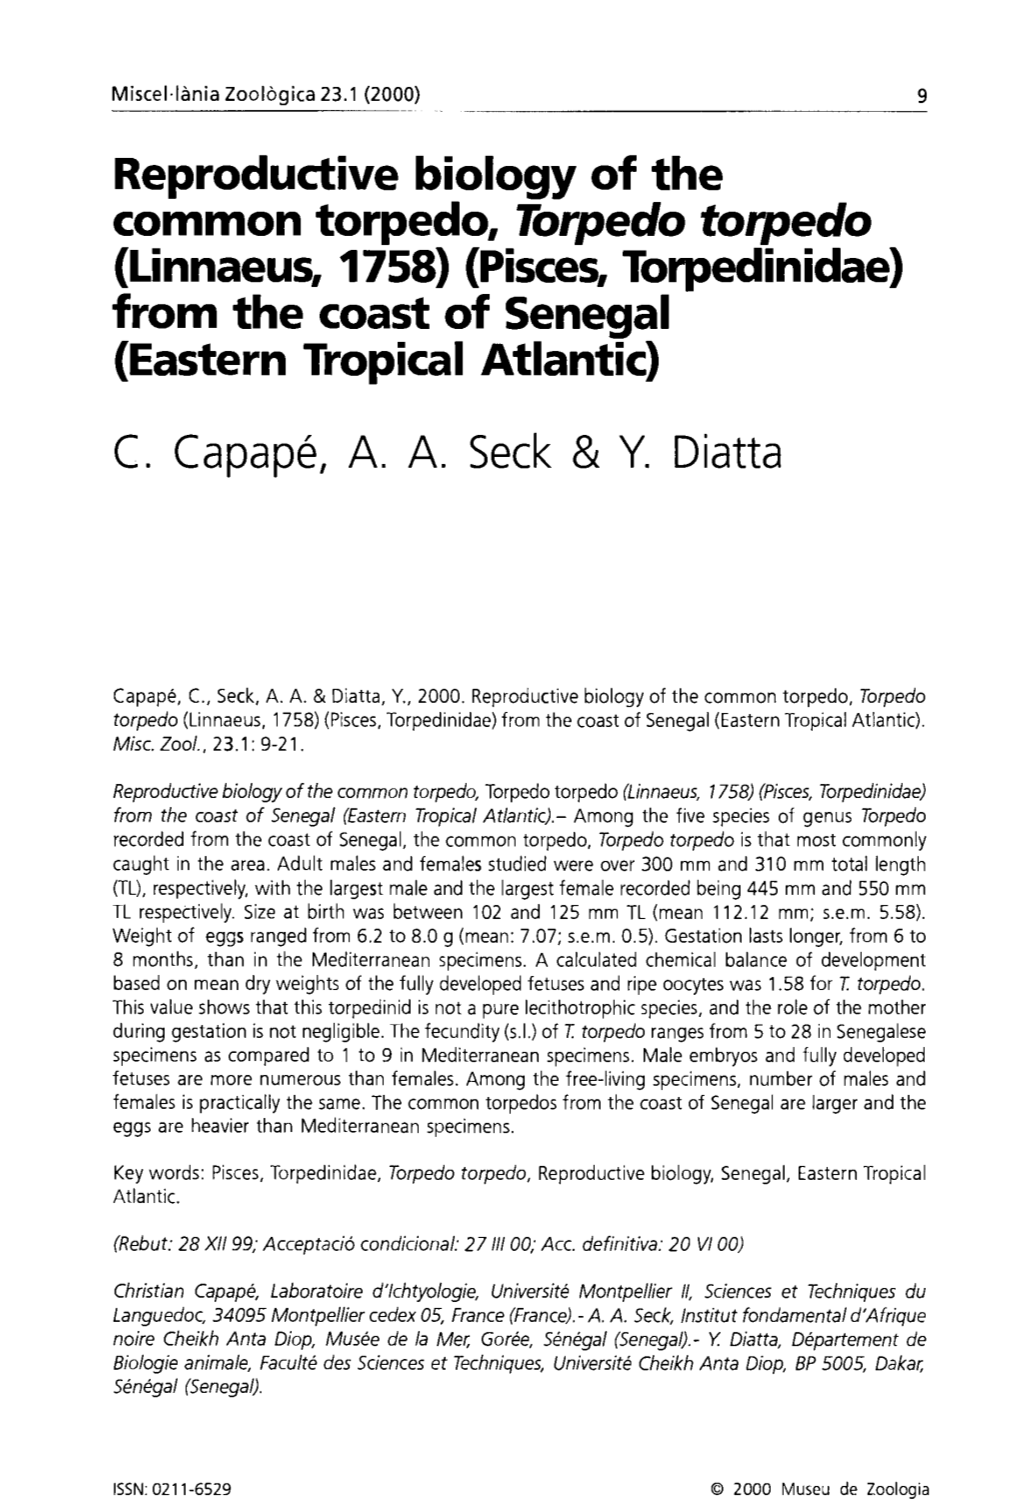 Reproductive Biology of the Common Torpedo, Torpedo Torpedo (Linnaeus, 1758) (Pisces, Torpedinidae) from the Coast of Senegal (Eastern Tropical Atlantic)